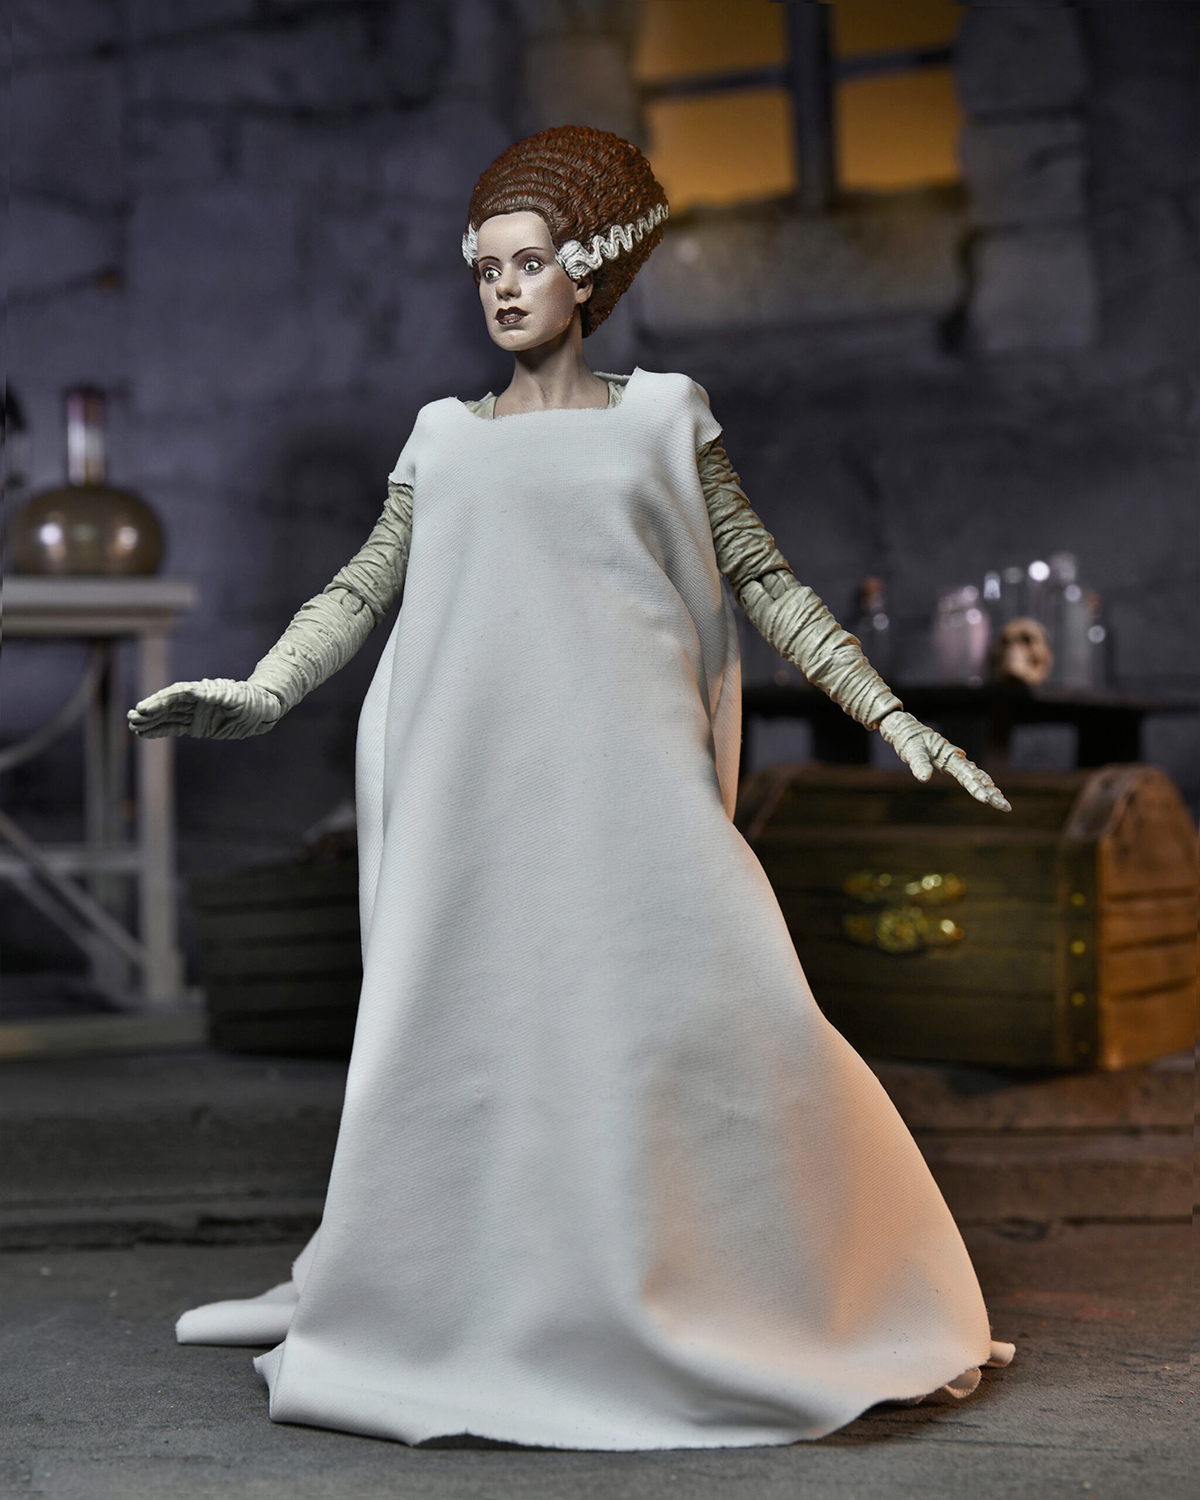 Bride of Frankenstein (Color) Universal Monsters Ultimate 7 Inch Action Figure